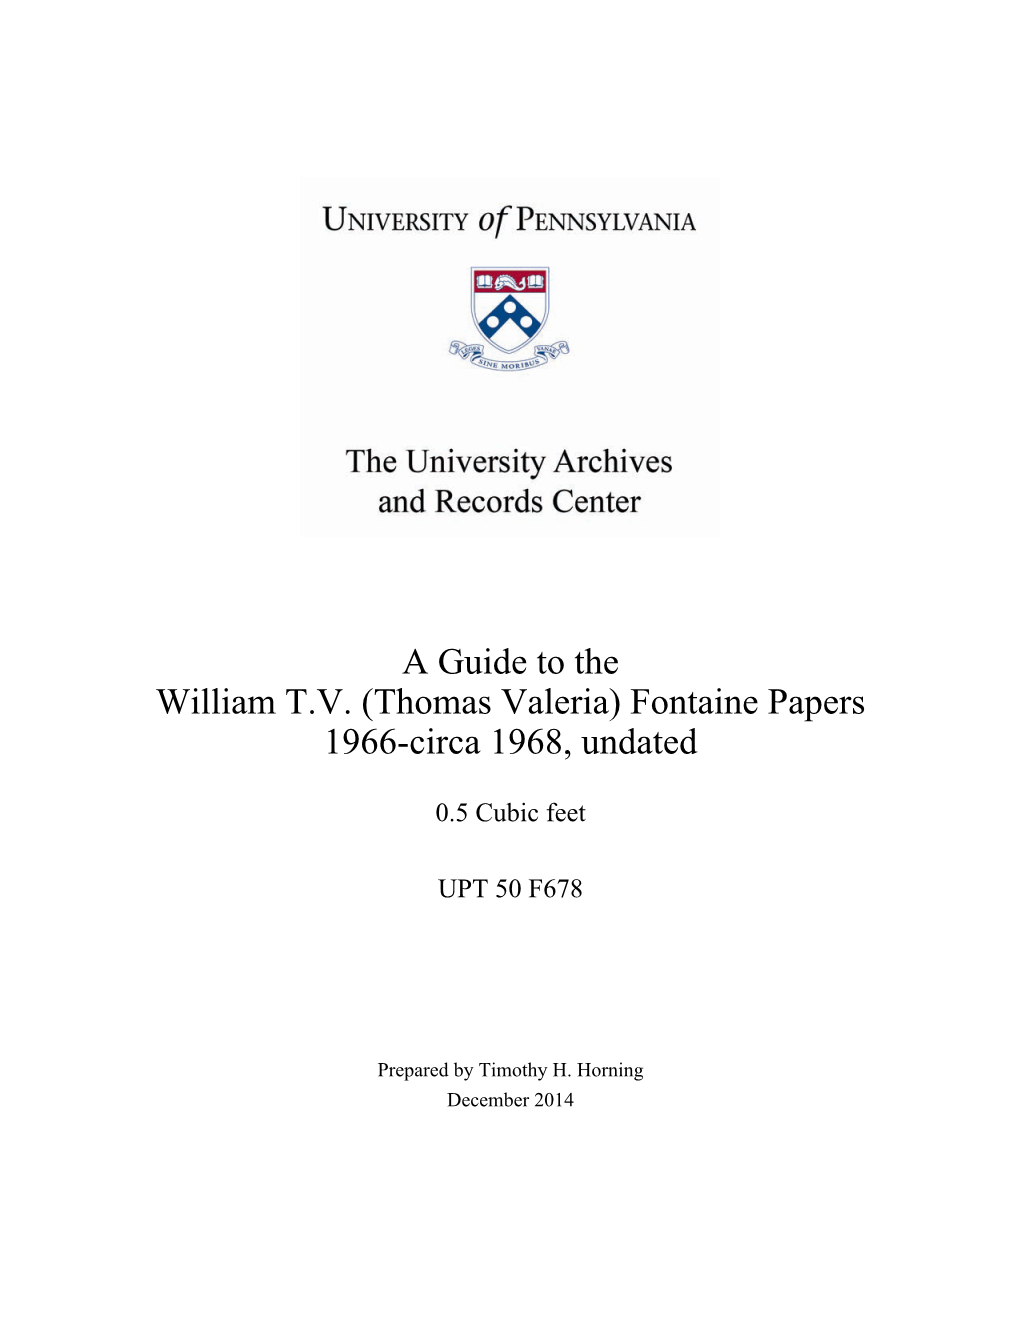 Thomas Valeria) Fontaine Papers (UPT 50 F678